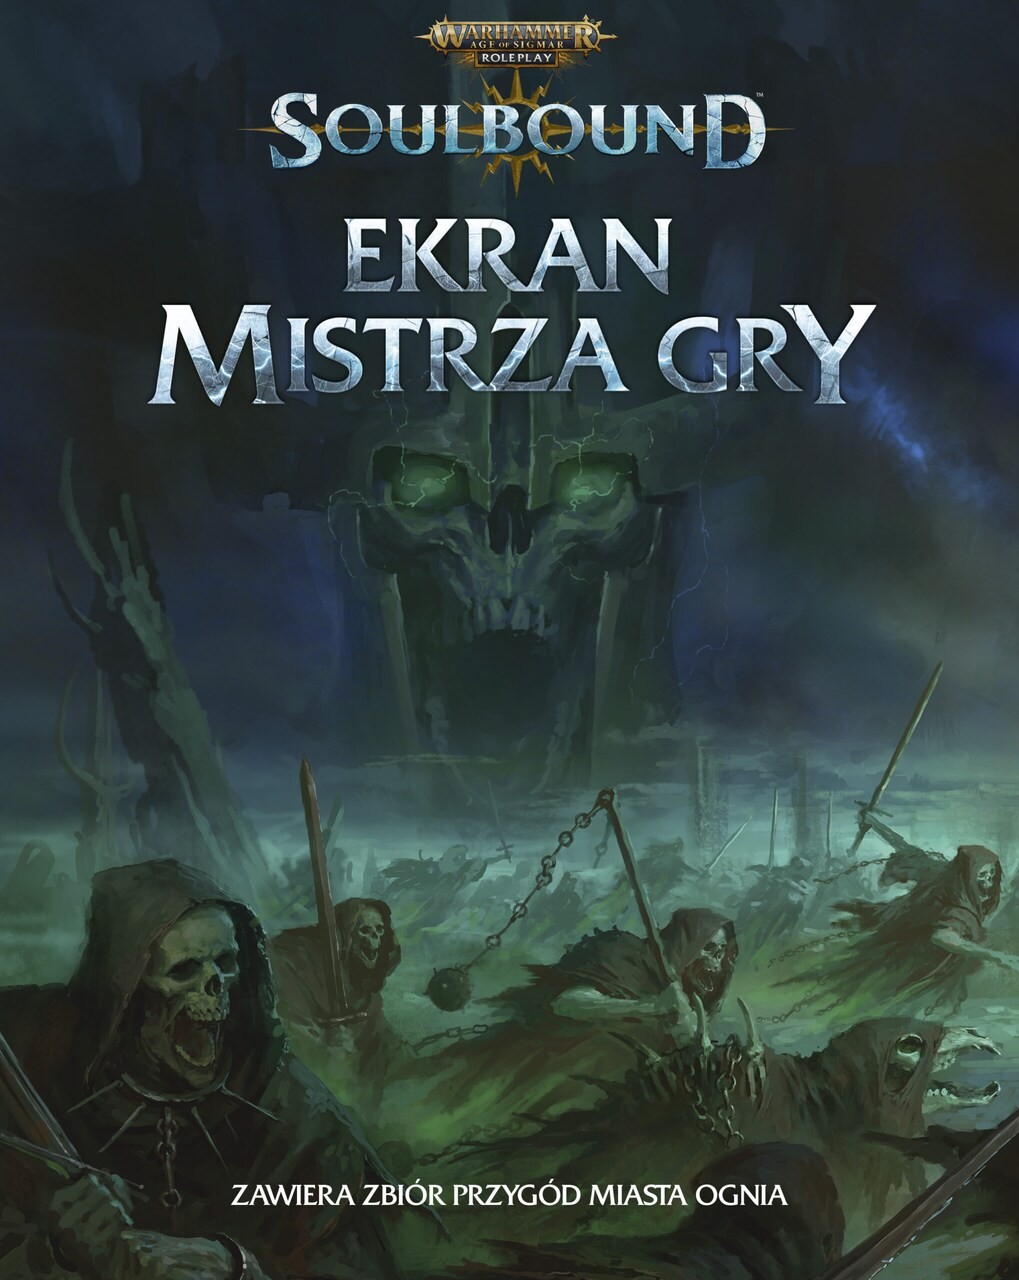 Warhammer Age of Sigmar Roleplay: Soulbound – Ekran Mistrza Gry